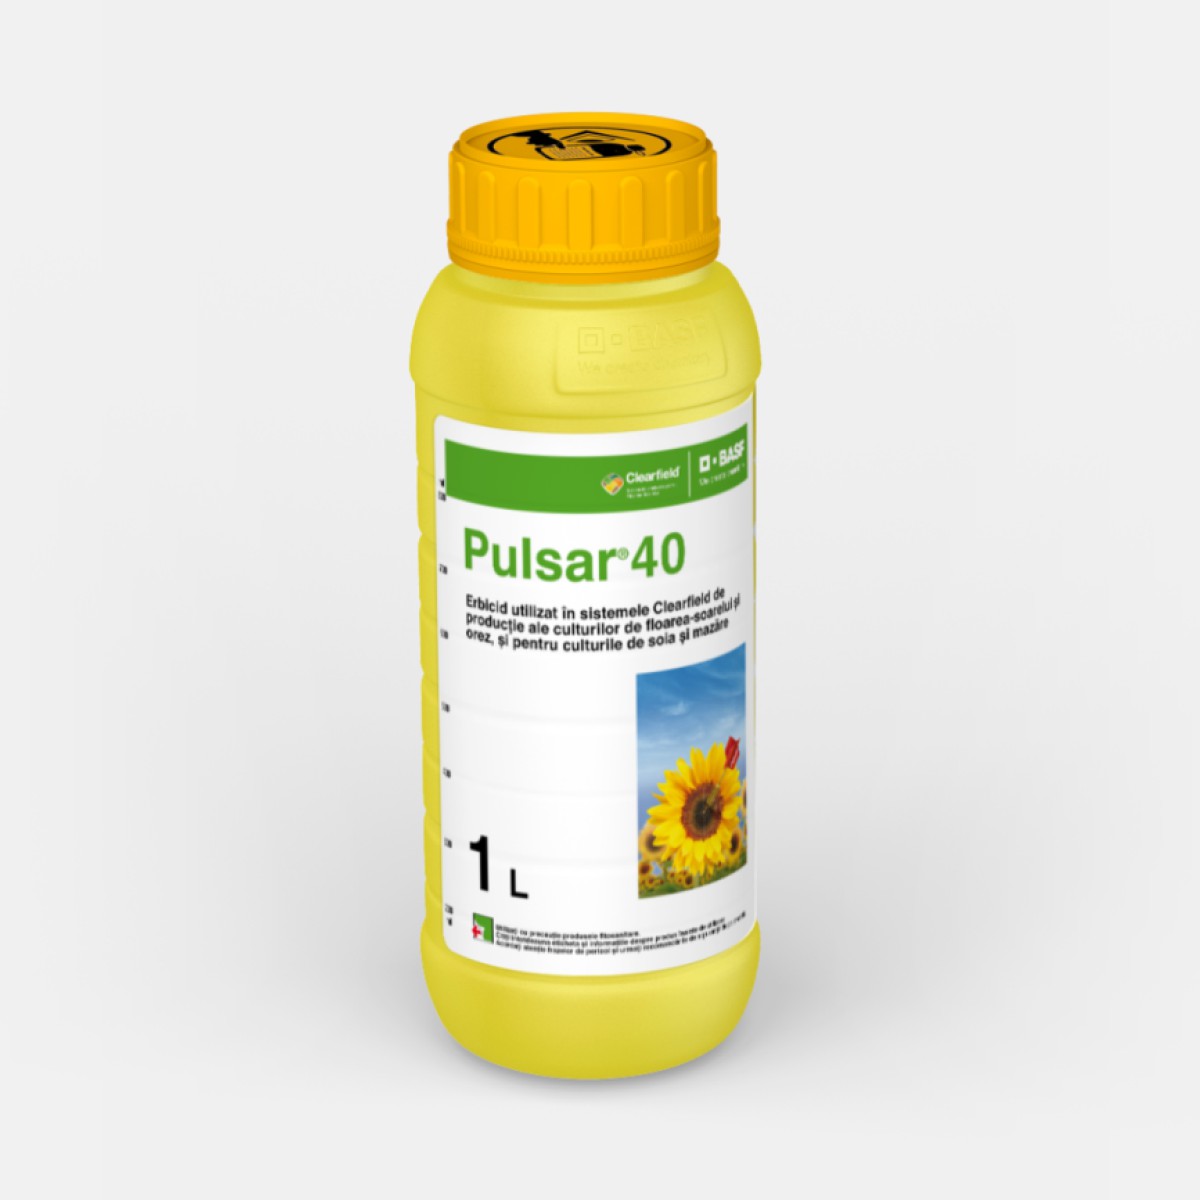 Pulsar 40